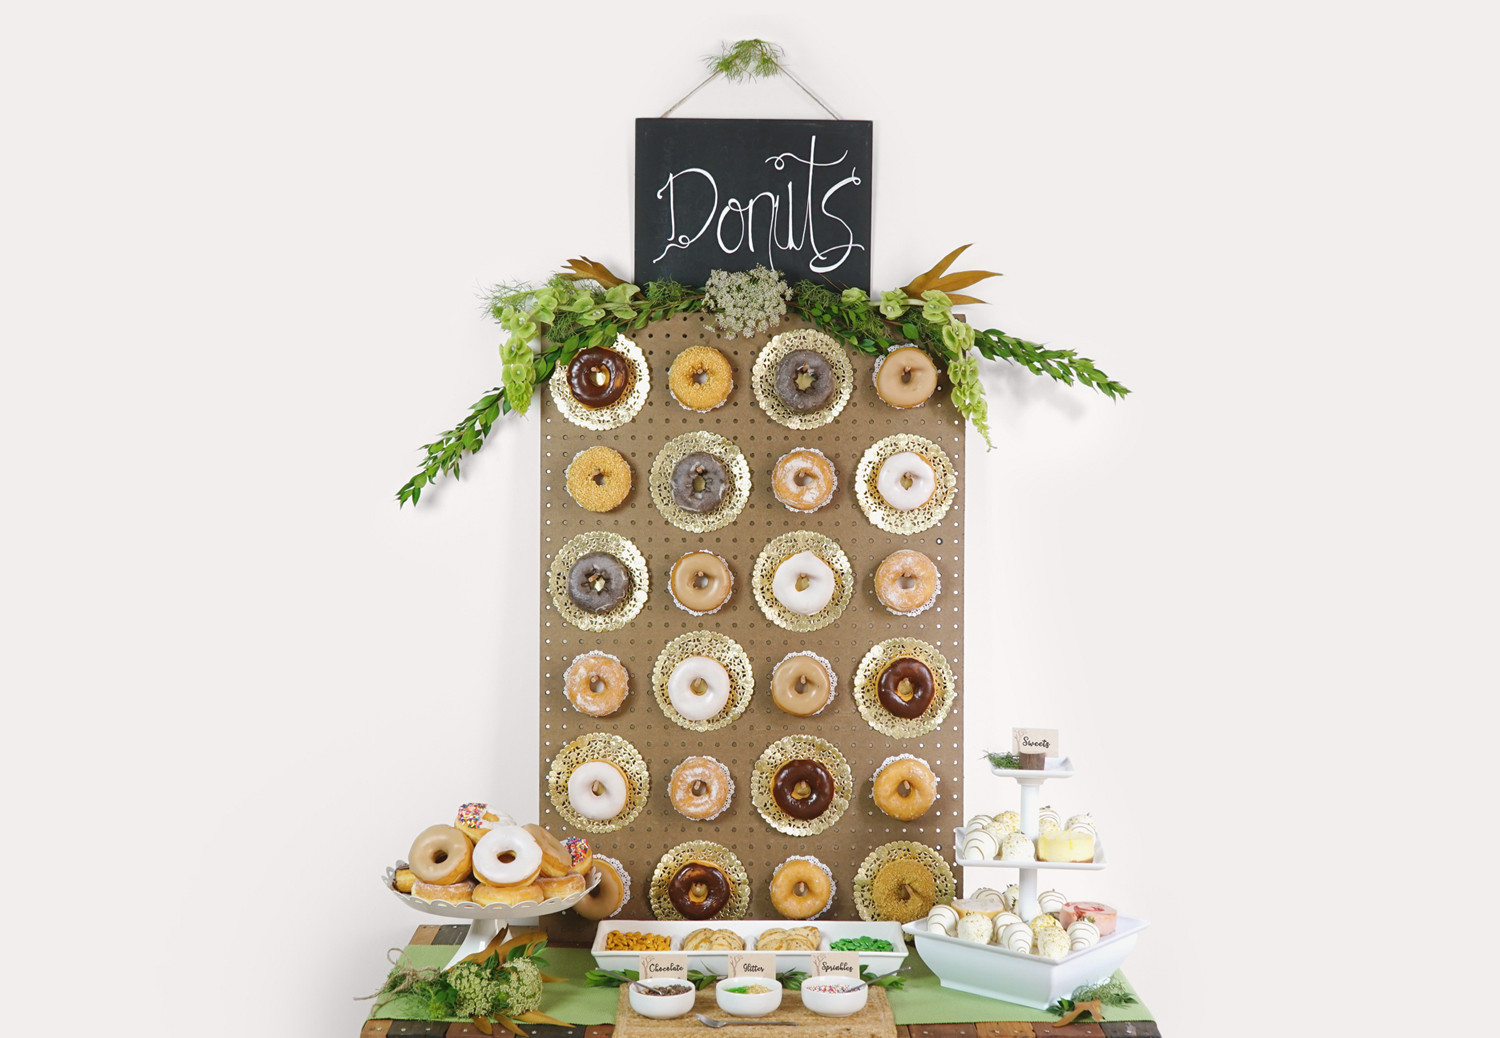 Best ideas about Donut Wall DIY
. Save or Pin DIY Tutorial Rustic DIY Doughnut Wall Now.